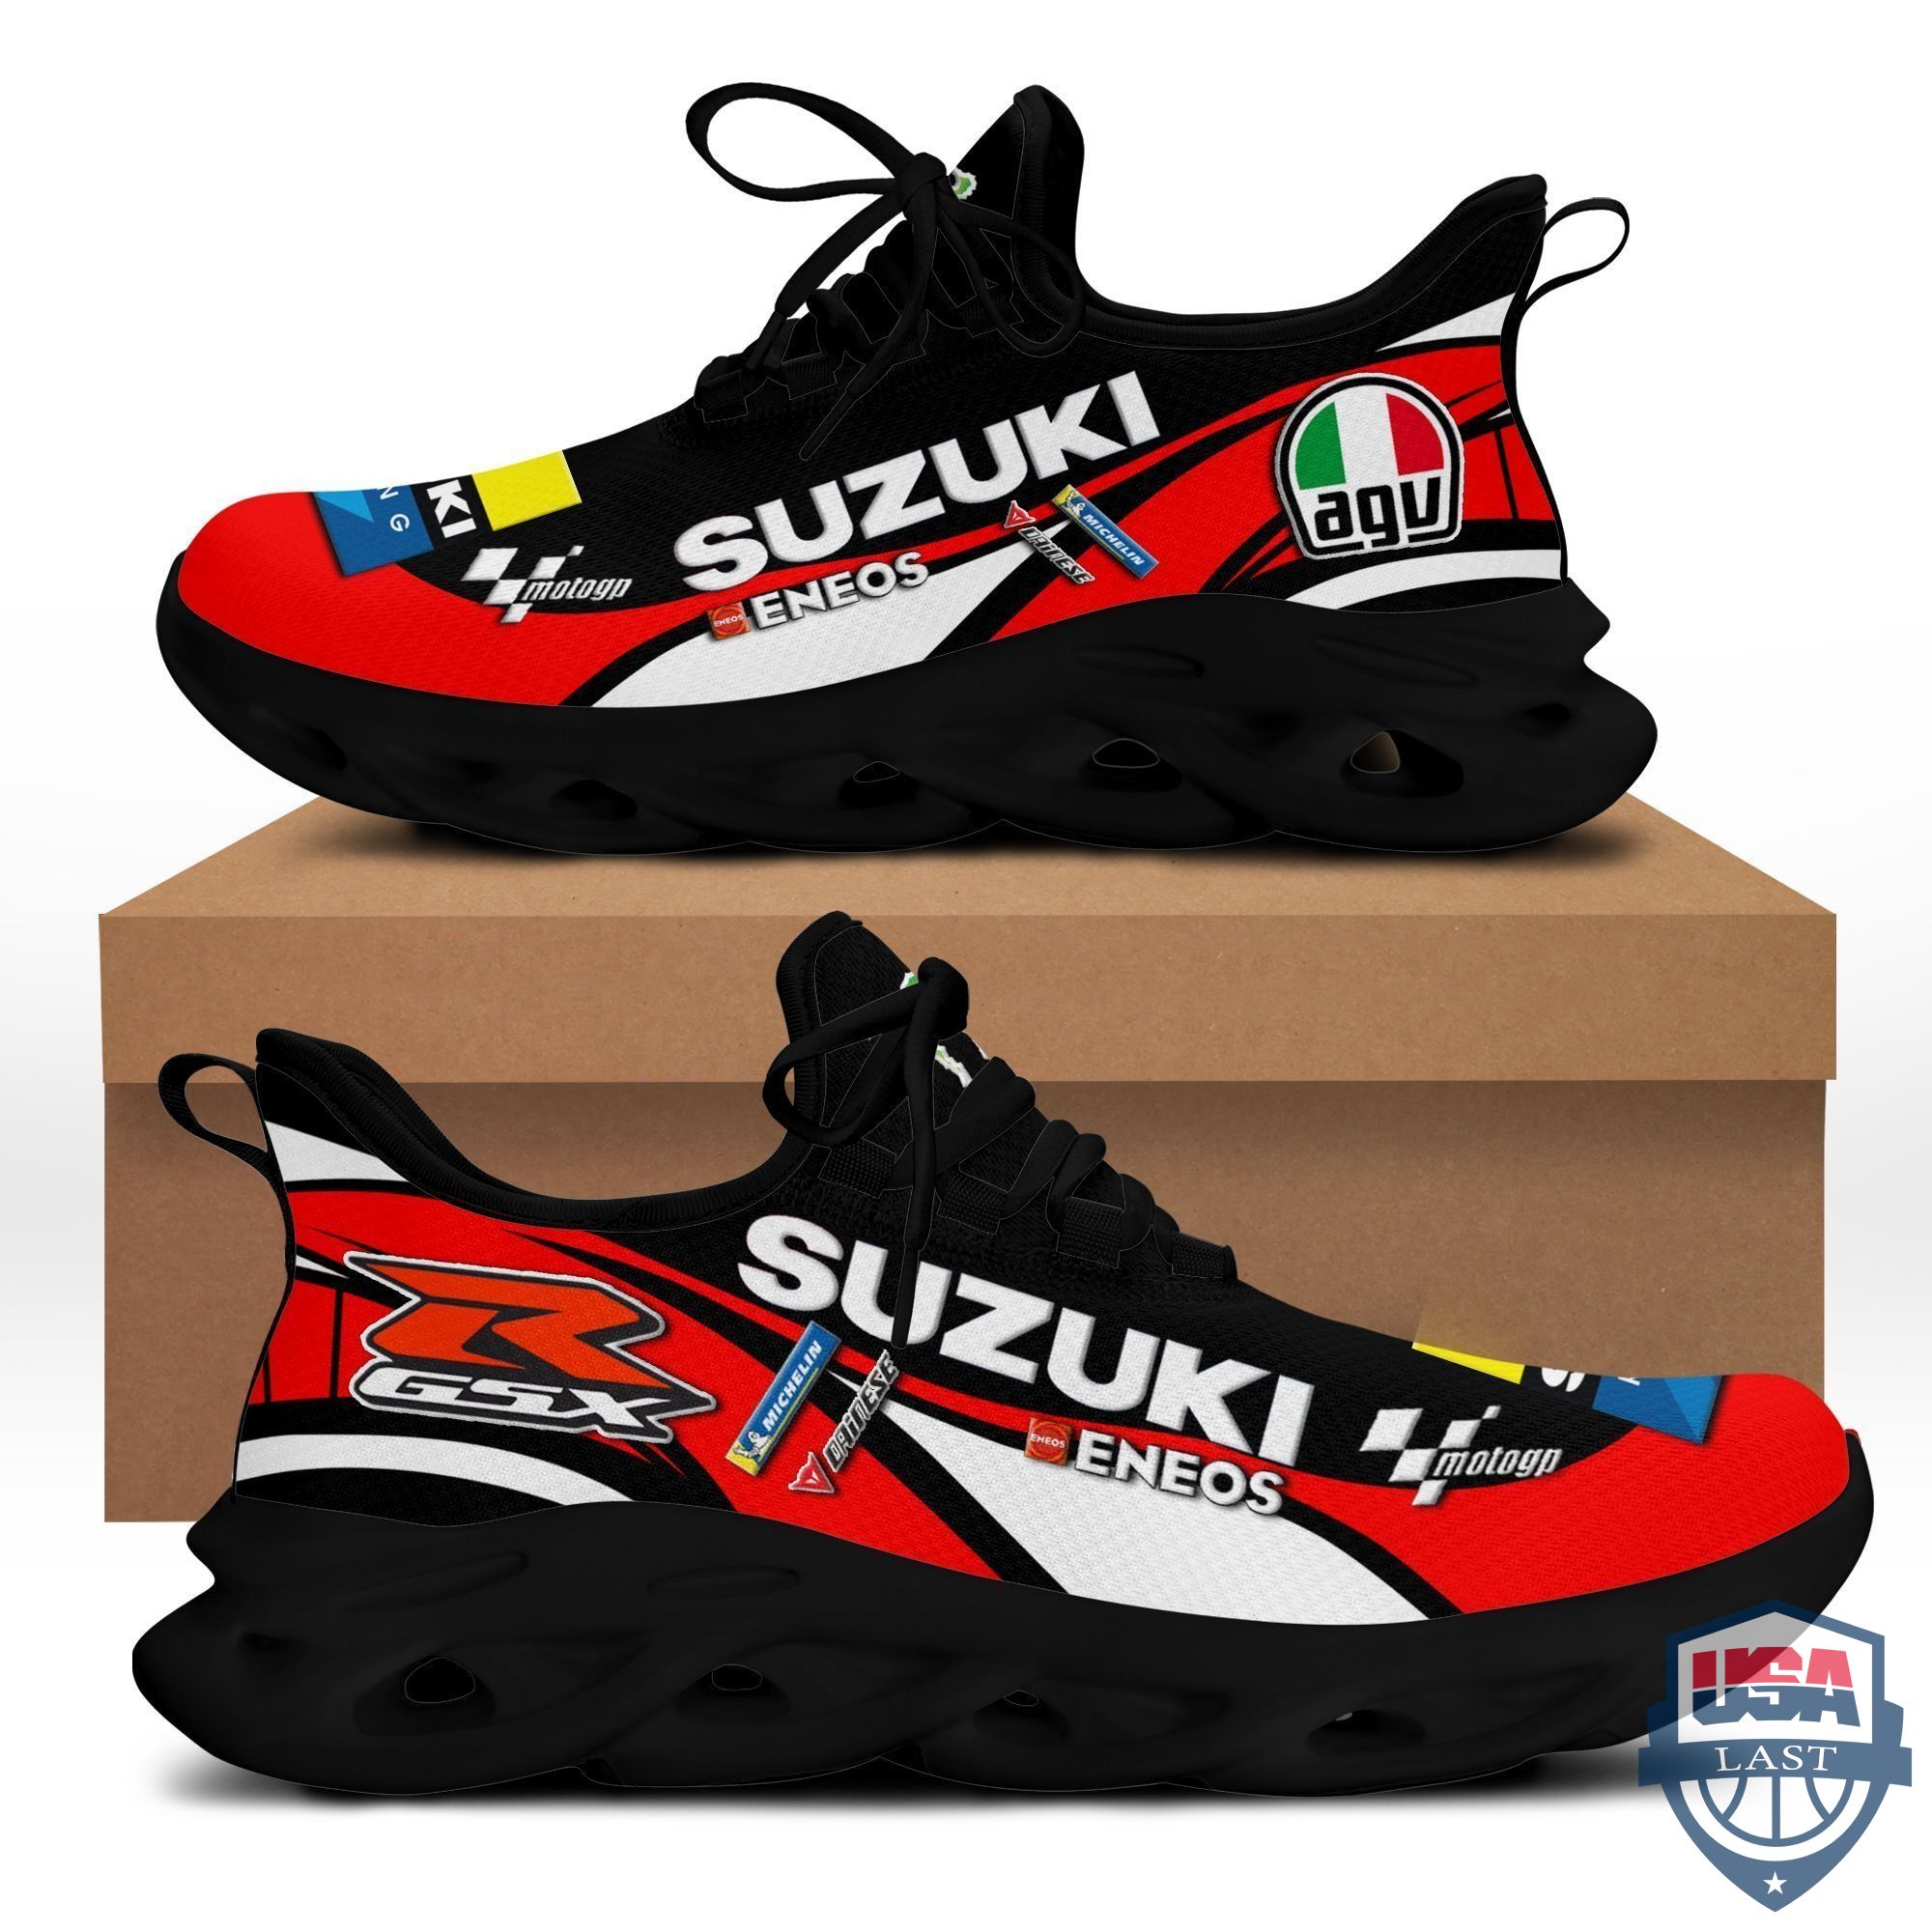 Suzuki Racing Red Sneaker Max Soul Shoes For Men, Women